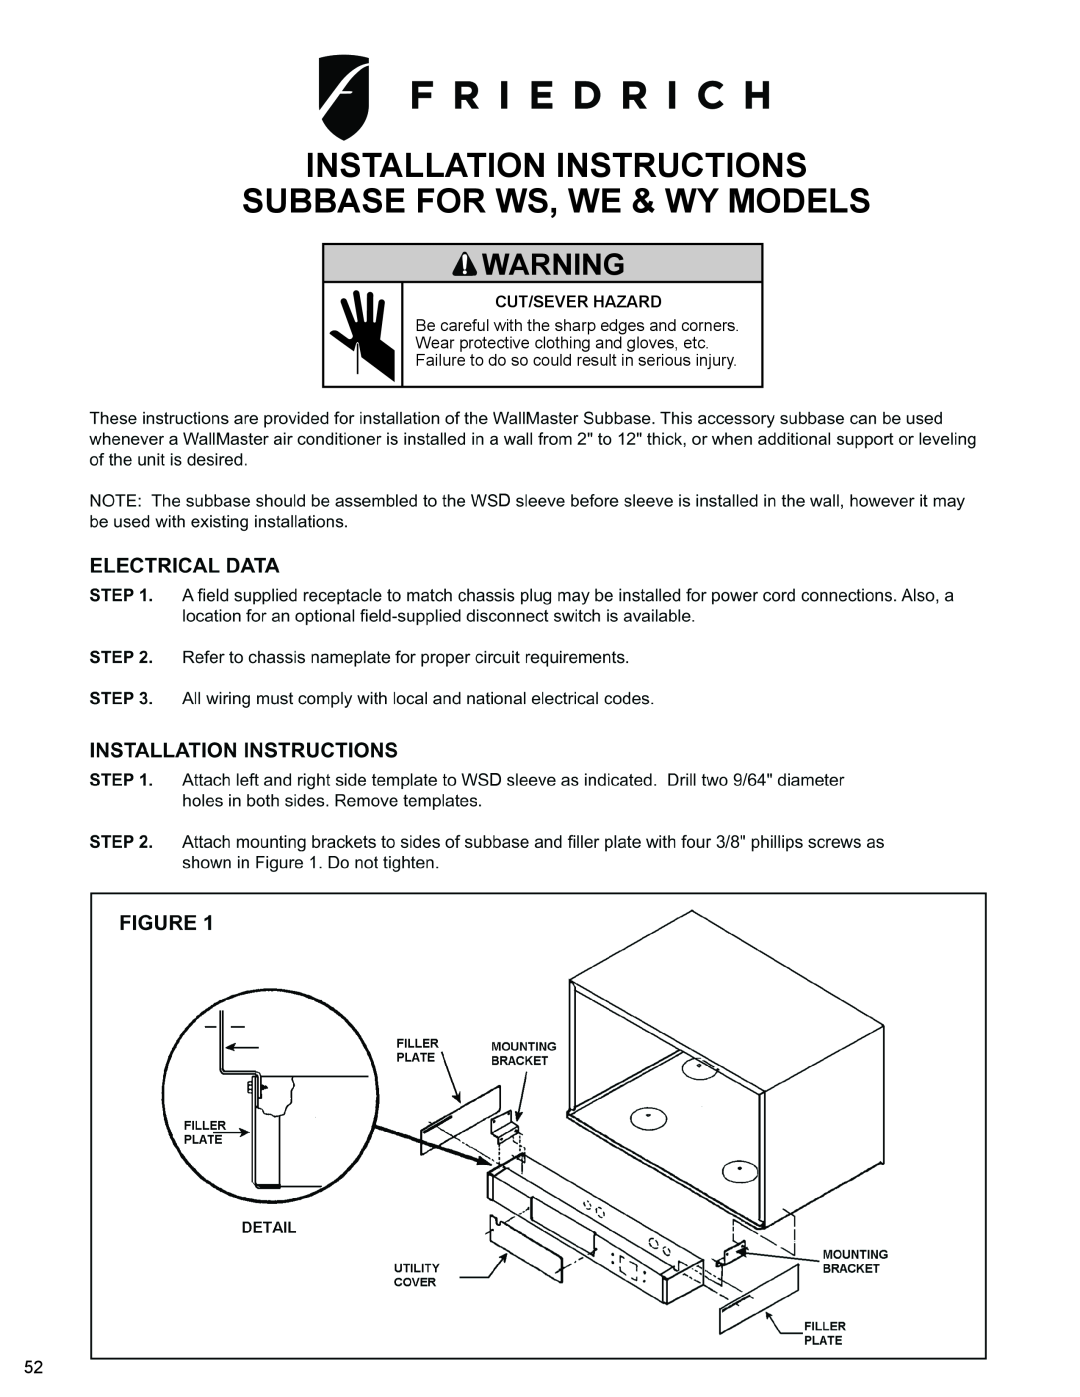 Friedrich WS10B10 service manual Subbase For Ws, We & Wy Models, Installation Instructions, Cut/Sever Hazard 